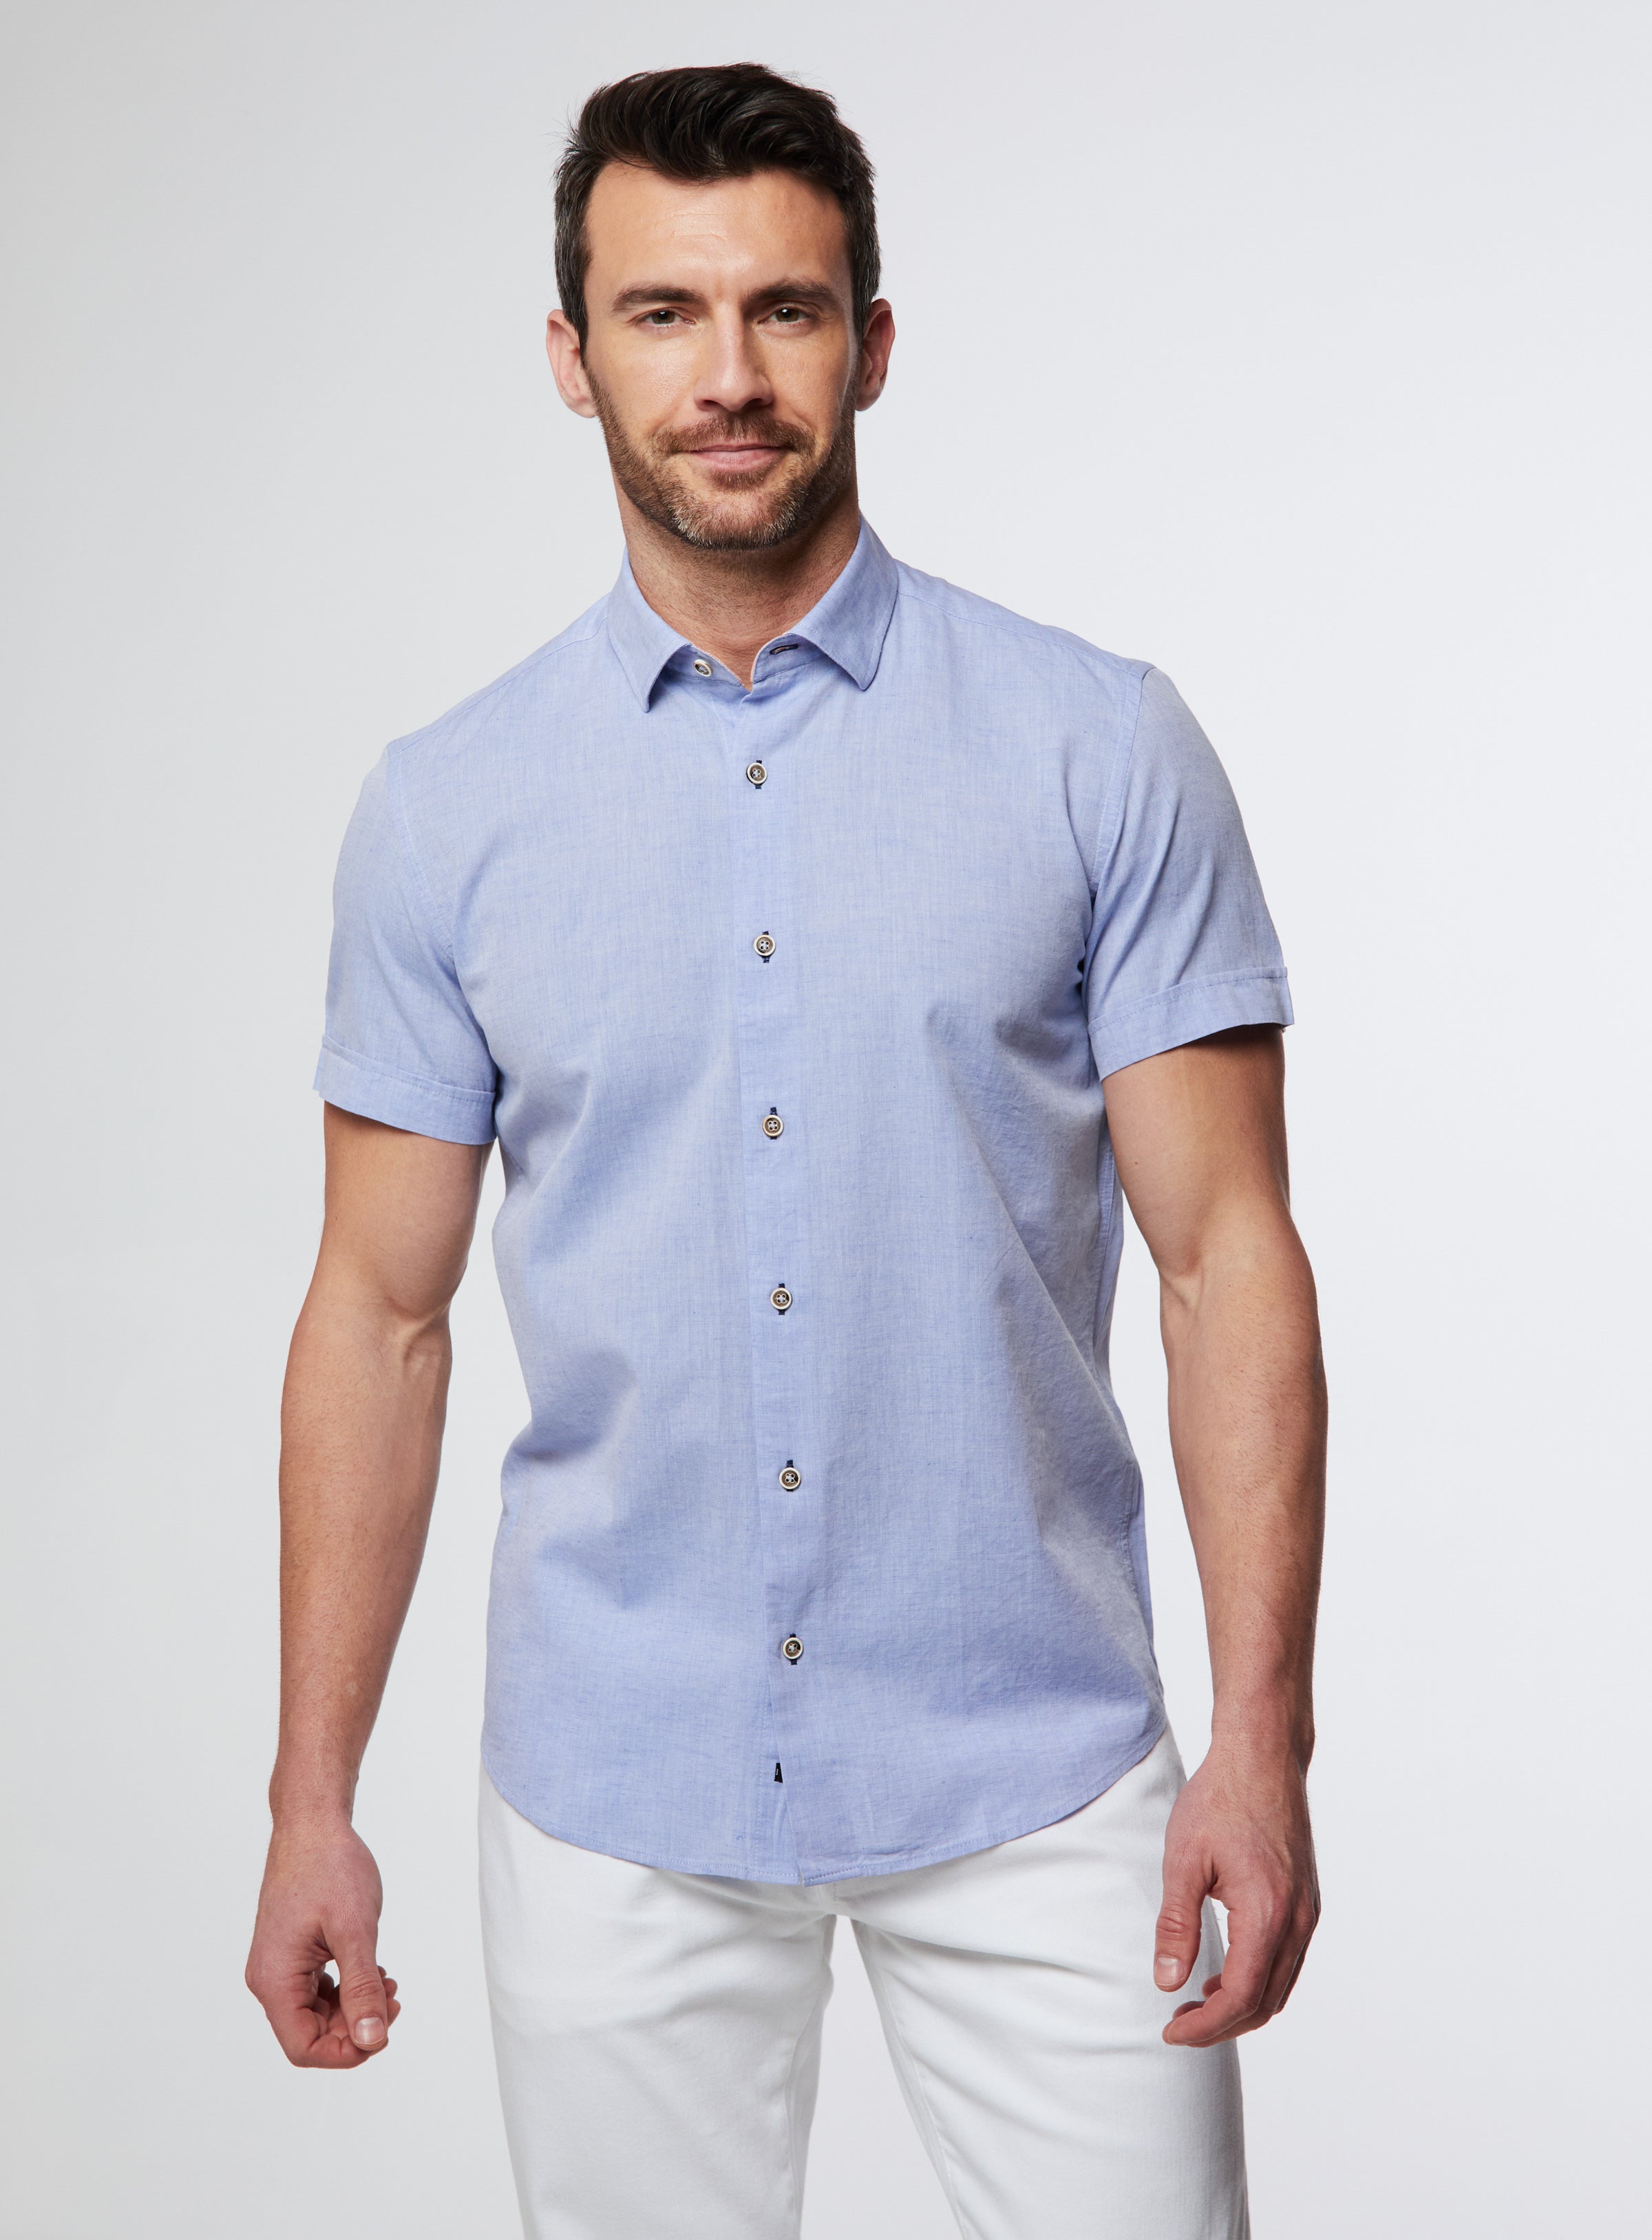 Men's Short Sleeve Shirts - Ernest